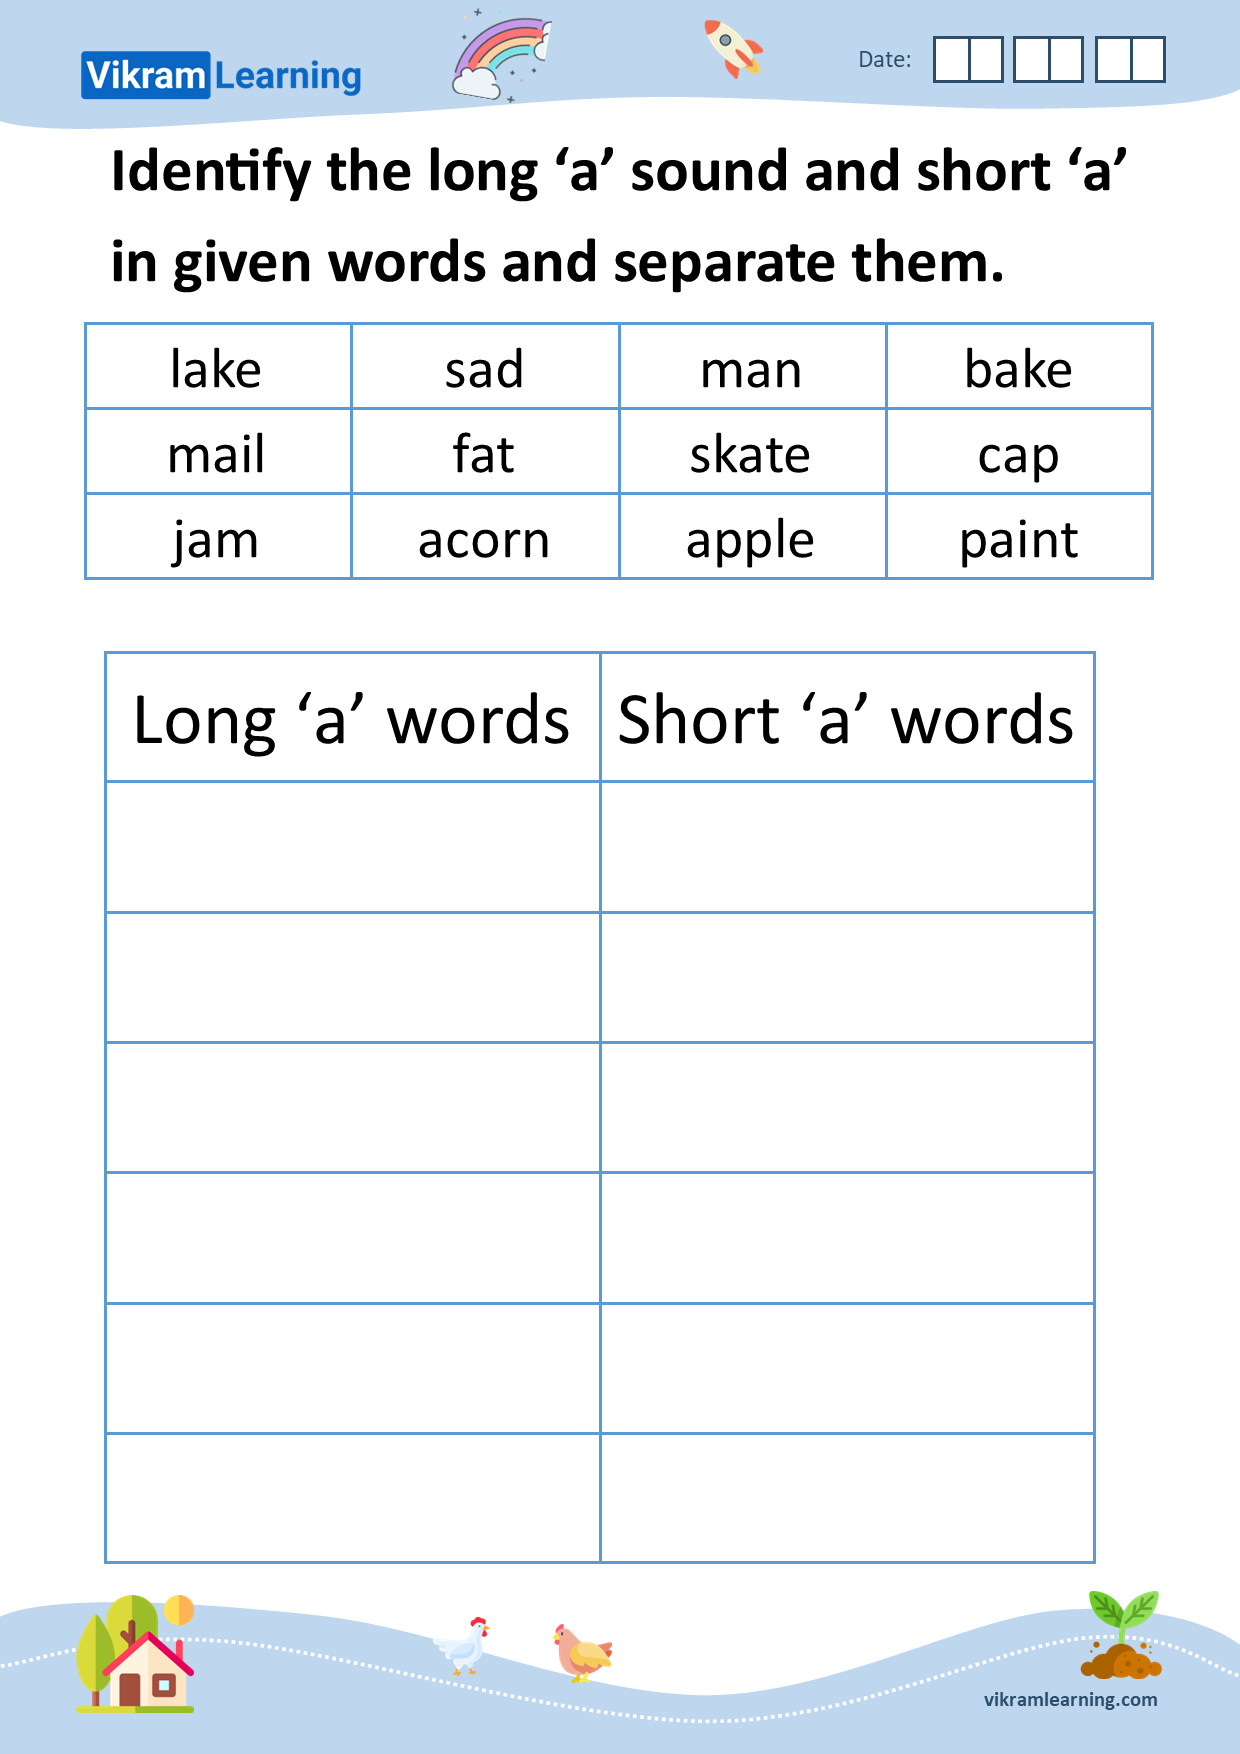 Download phonics short and long vowel sounds worksheets